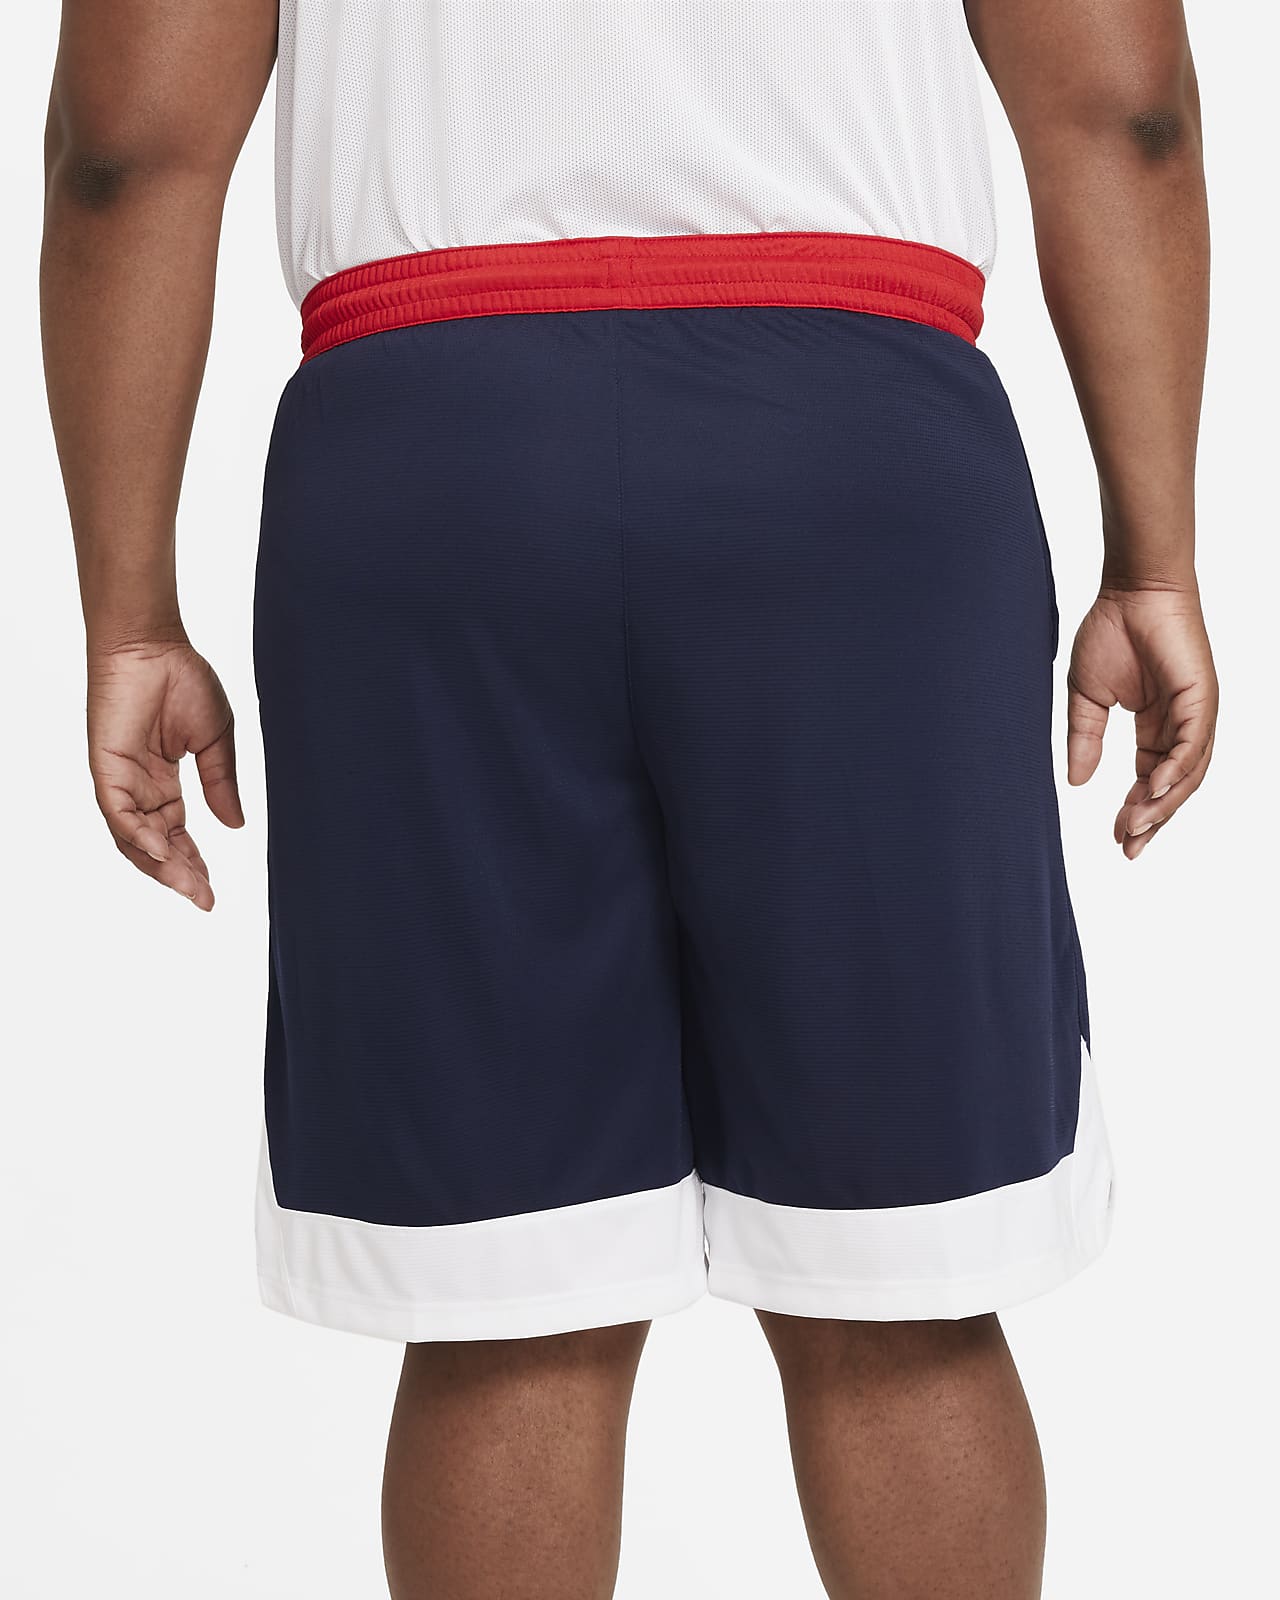 size 3xl nike basketball shorts